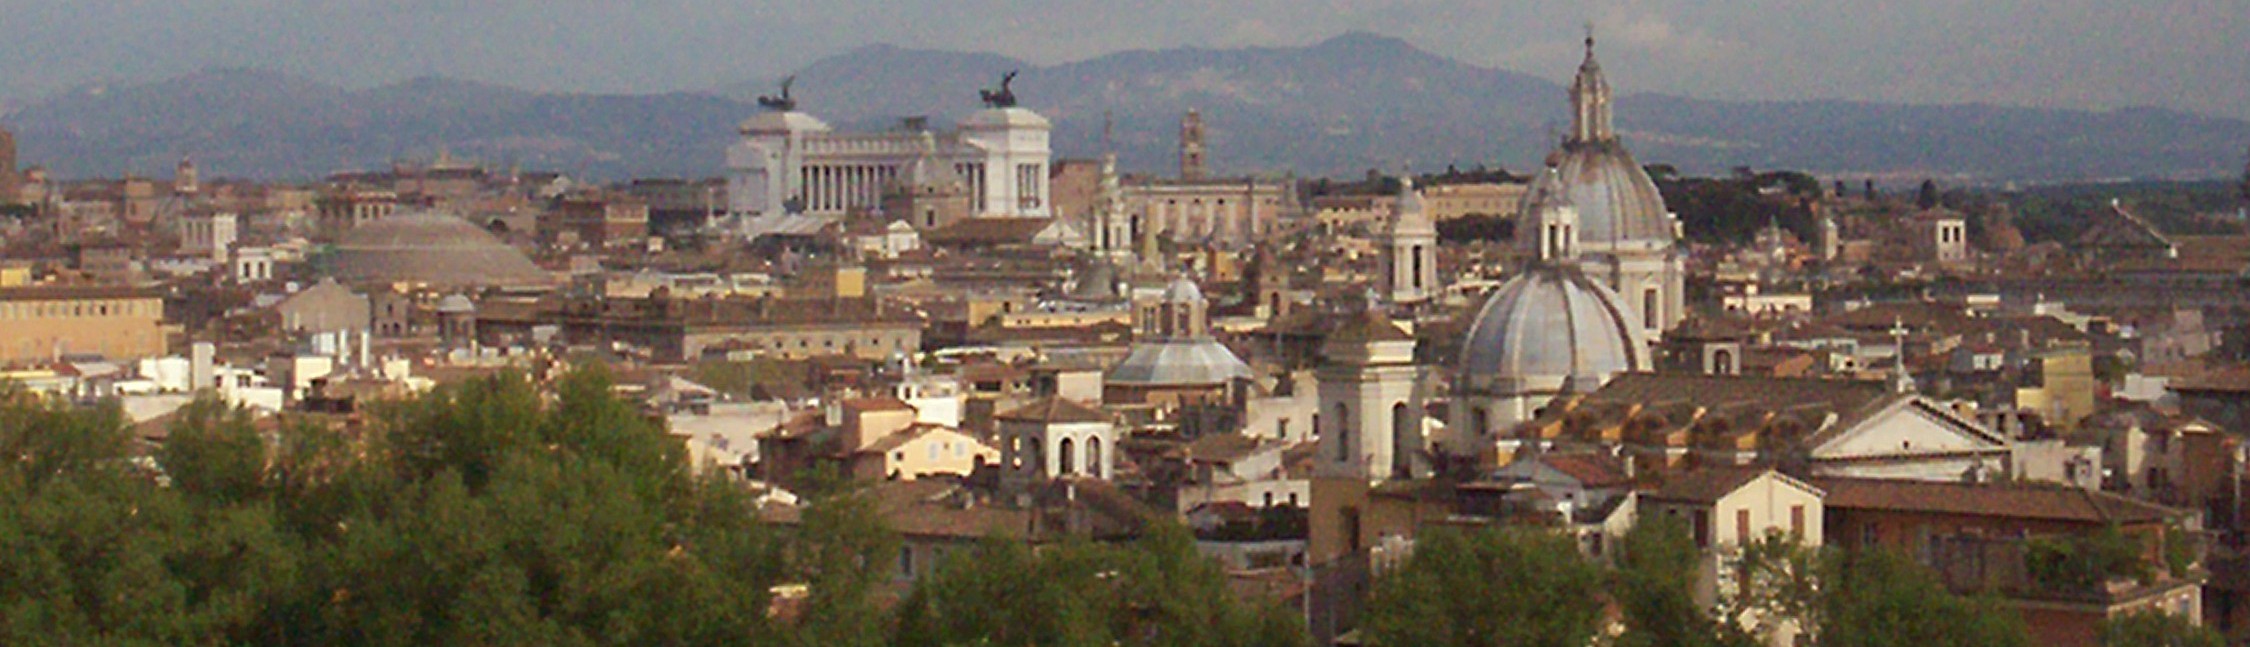  Monumento a Vittorio Emanuele II dominant la cit.